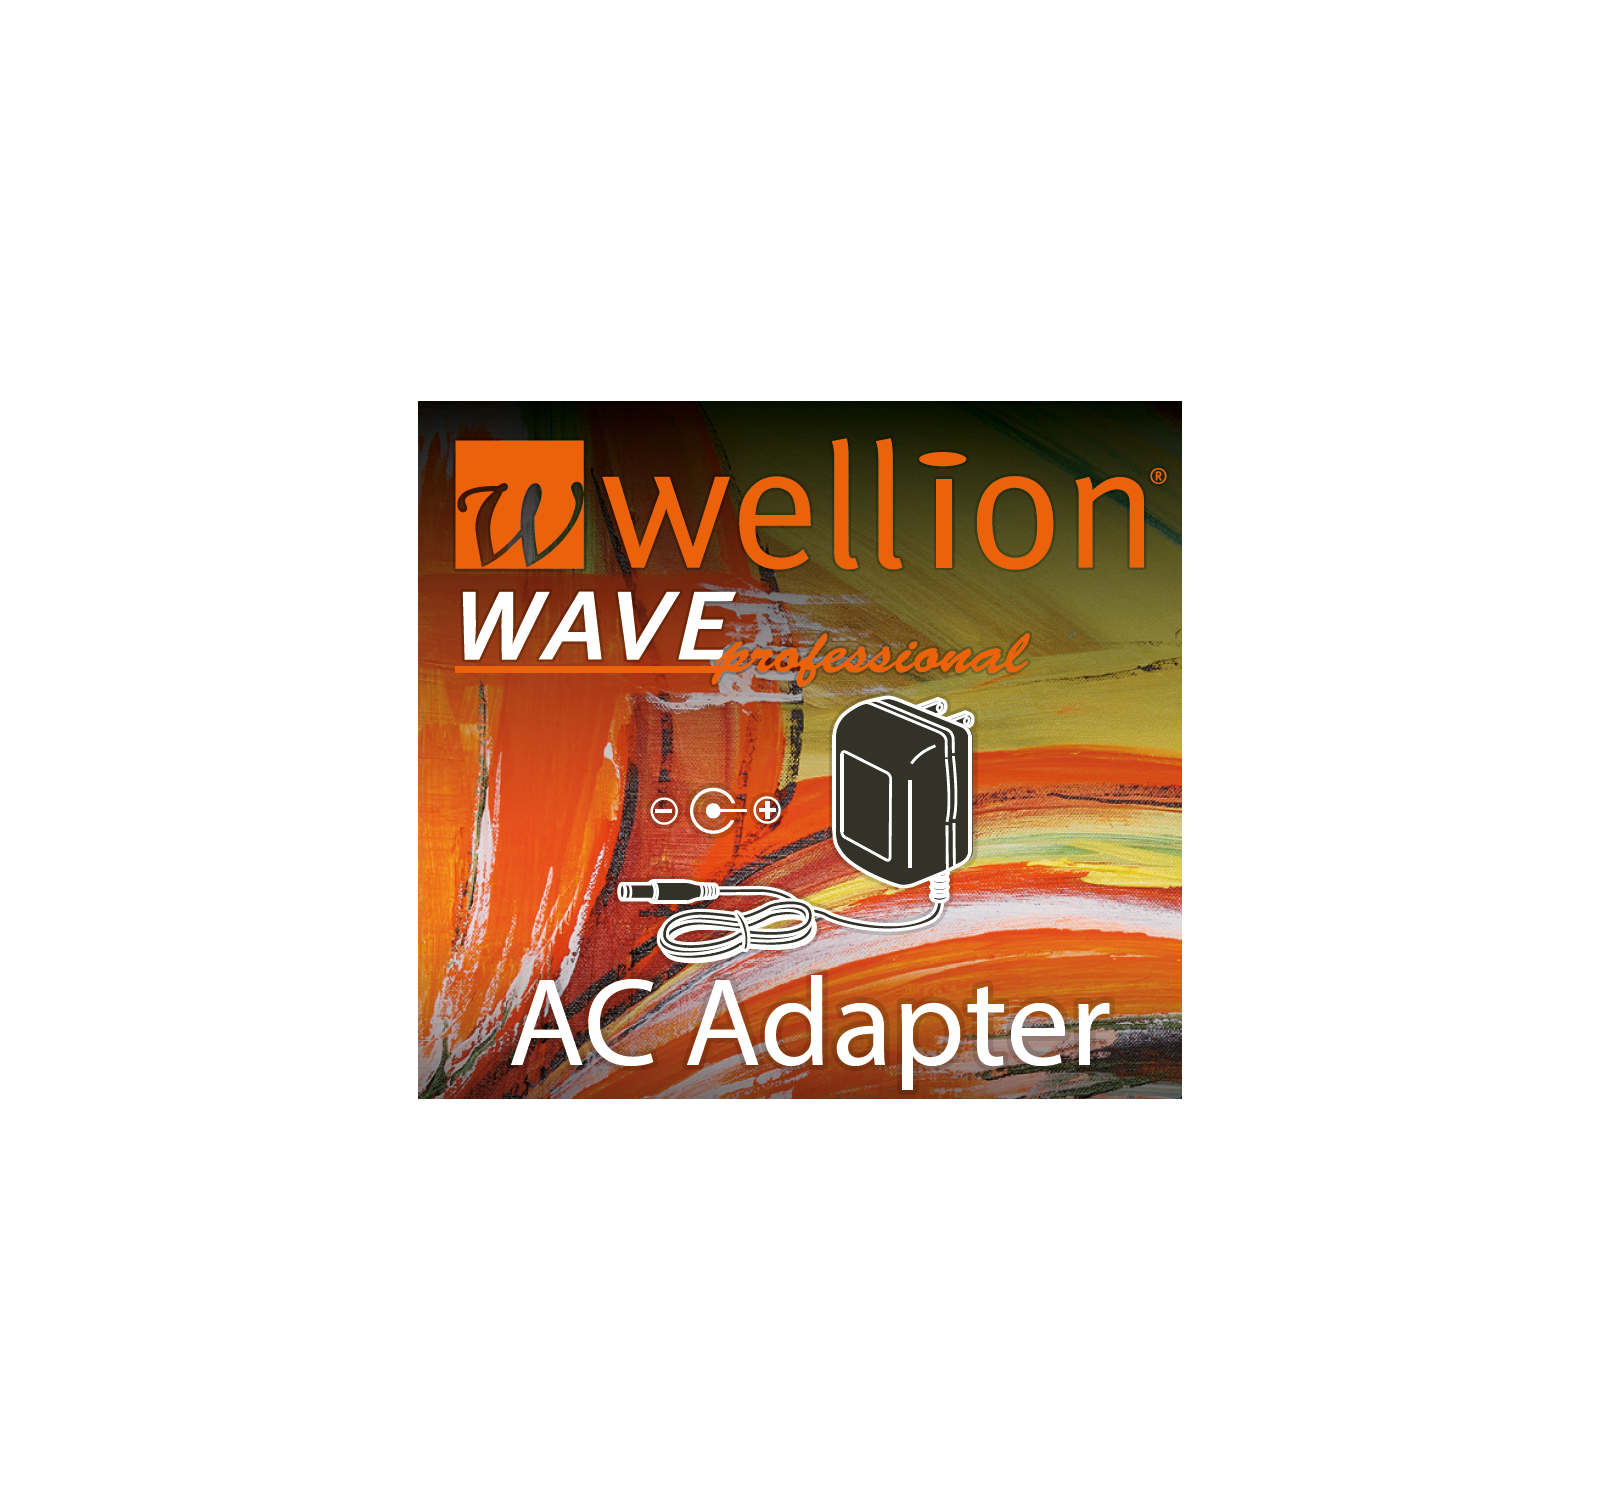 WELLWAVE022P Wellion WAVE Professional AC adapter